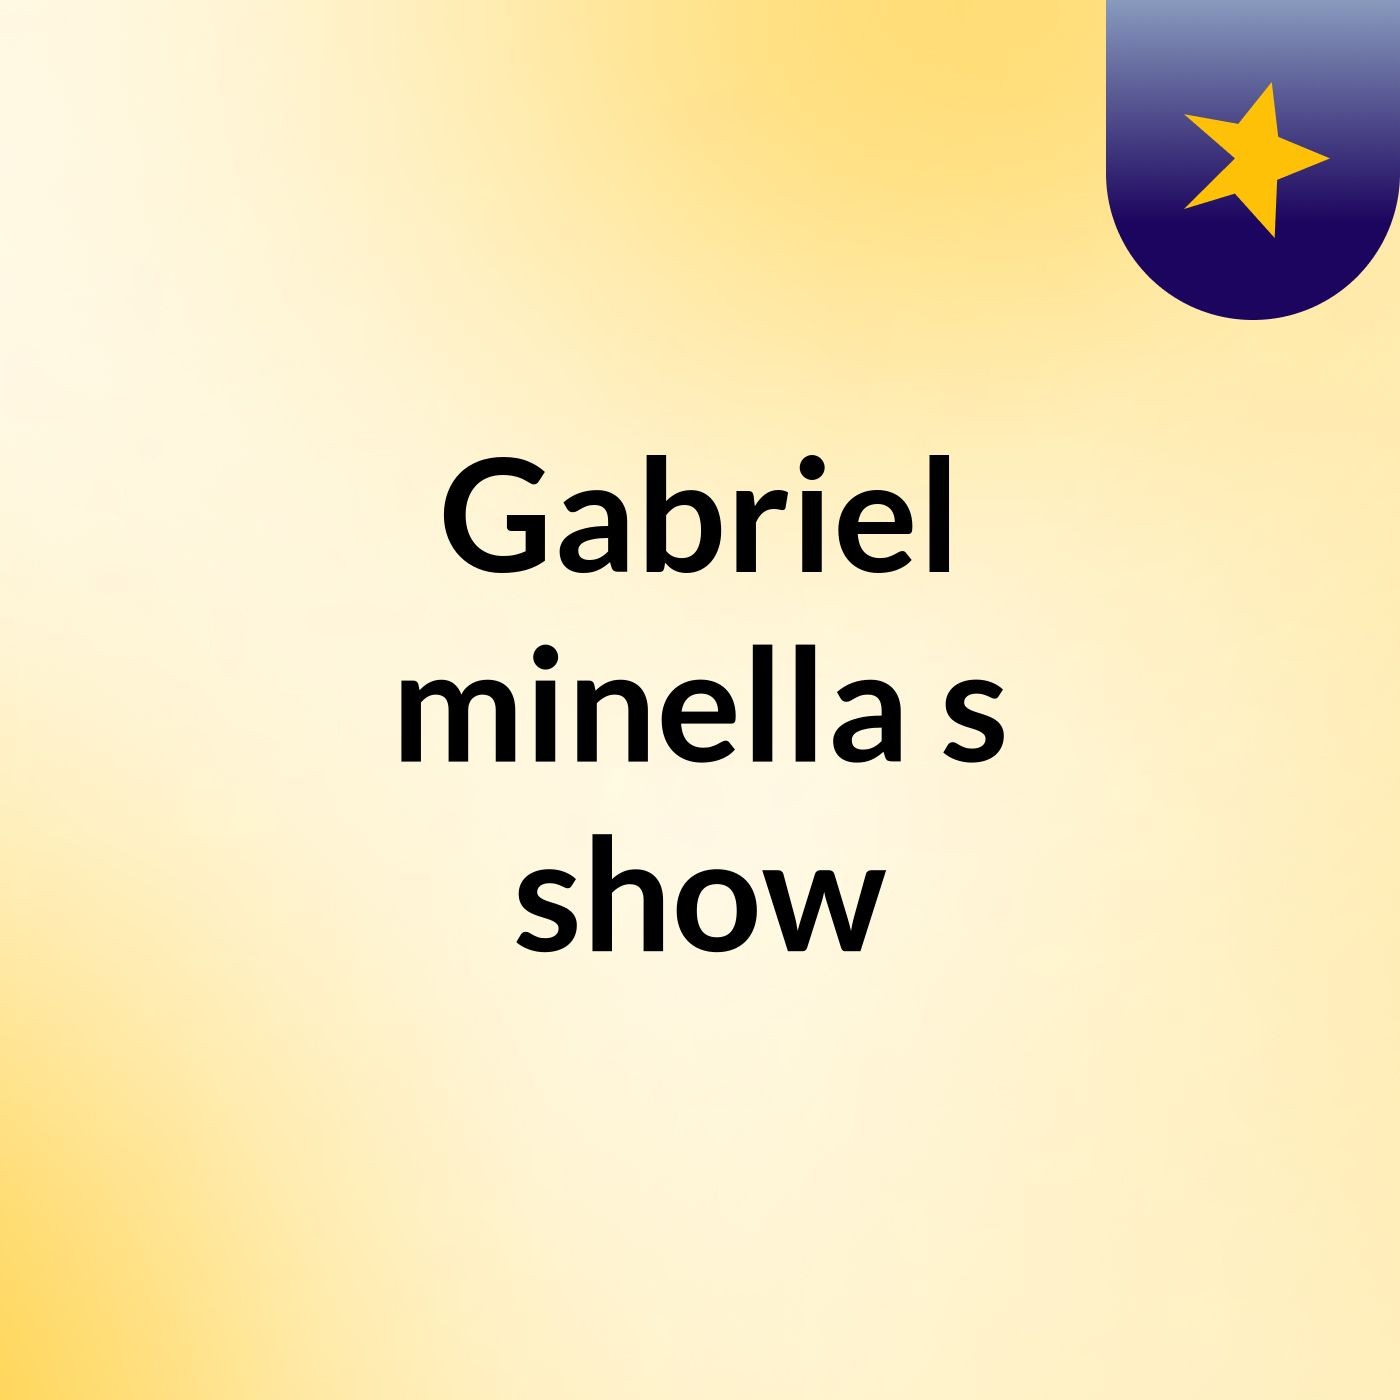 Gabriel minella's show